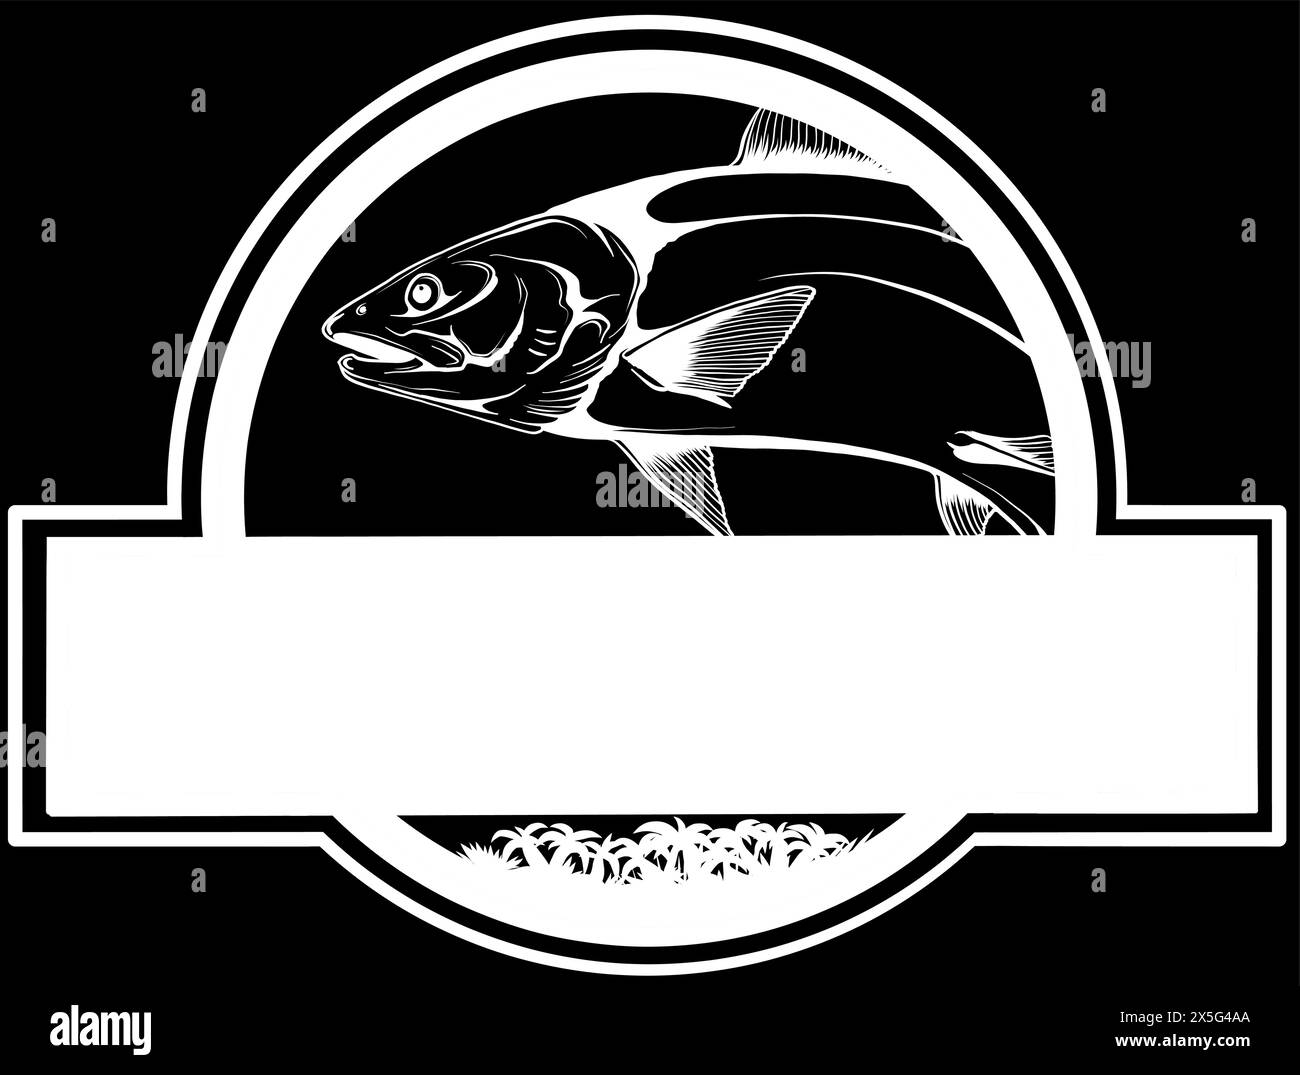 white silhouette of Fish salmon logo on black background vector illustration Stock Vector